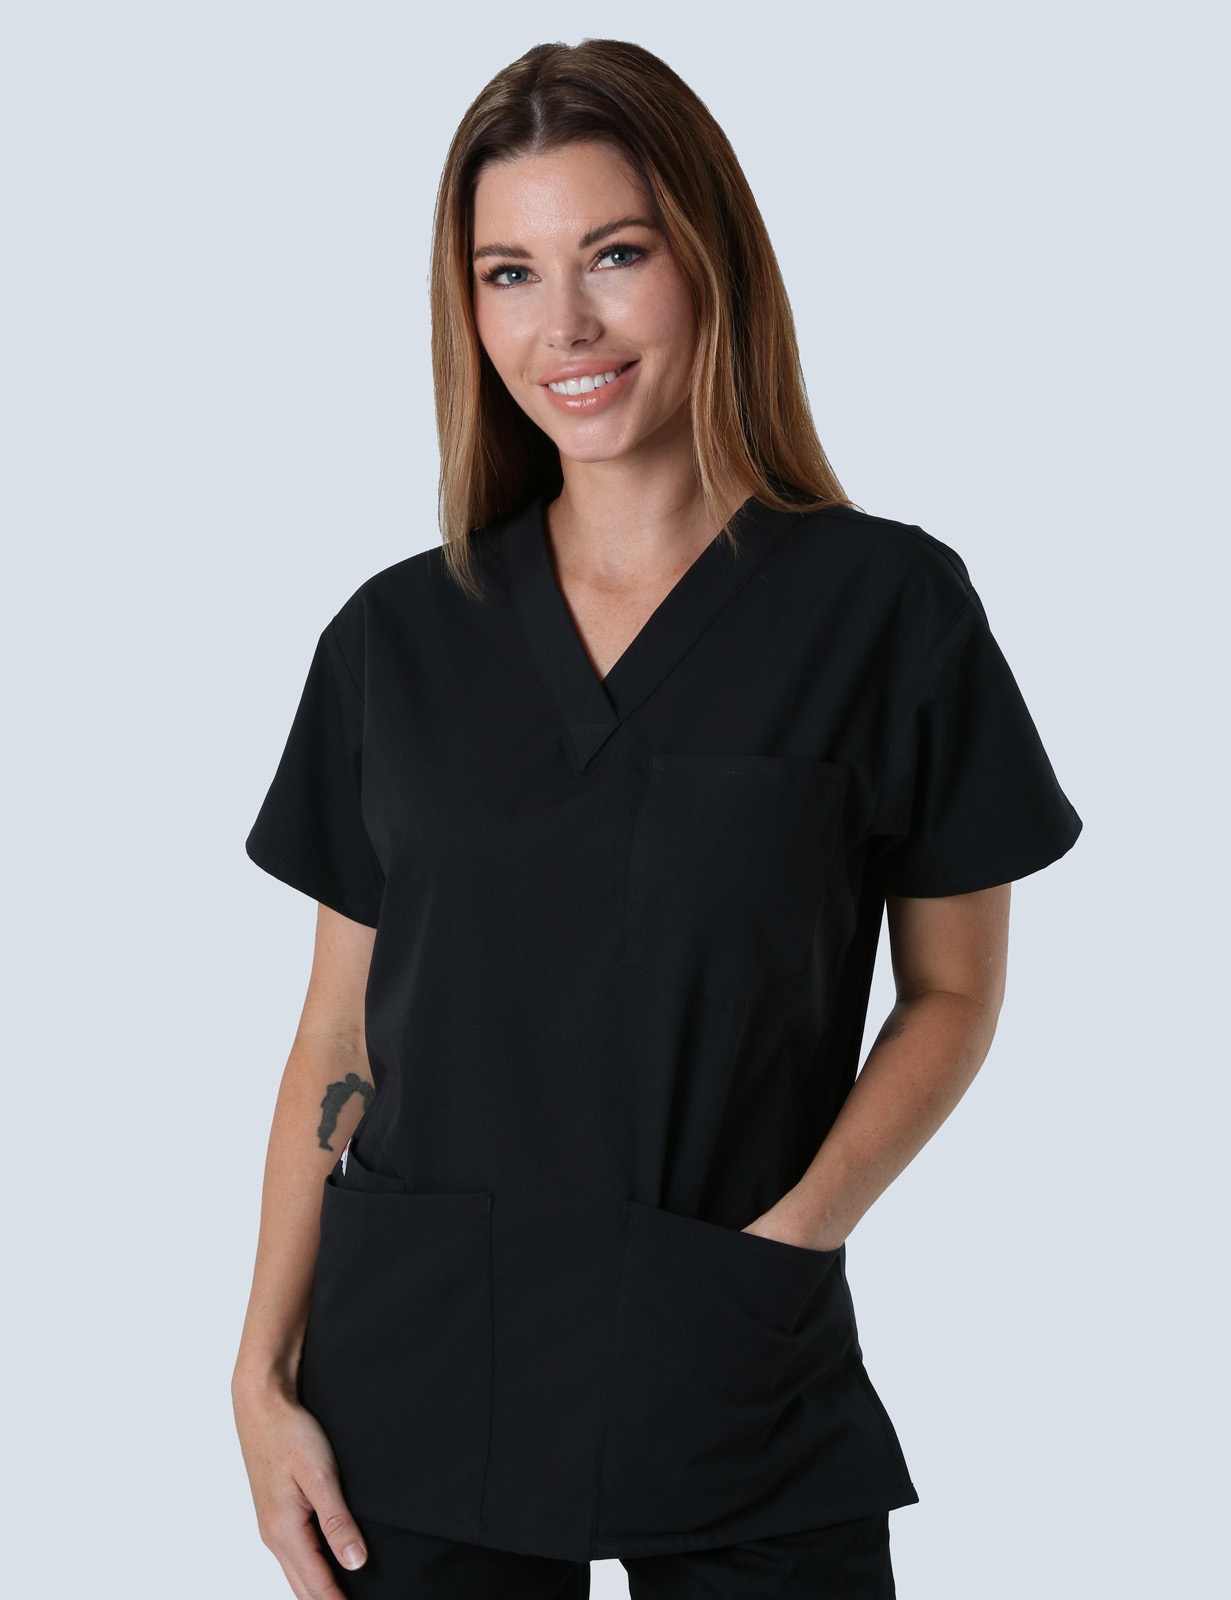 Queensland Children's Hospital Emergency Department Clinical Facilitator Uniform Top Bundle  (4 Pocket Top in Black incl Logos)